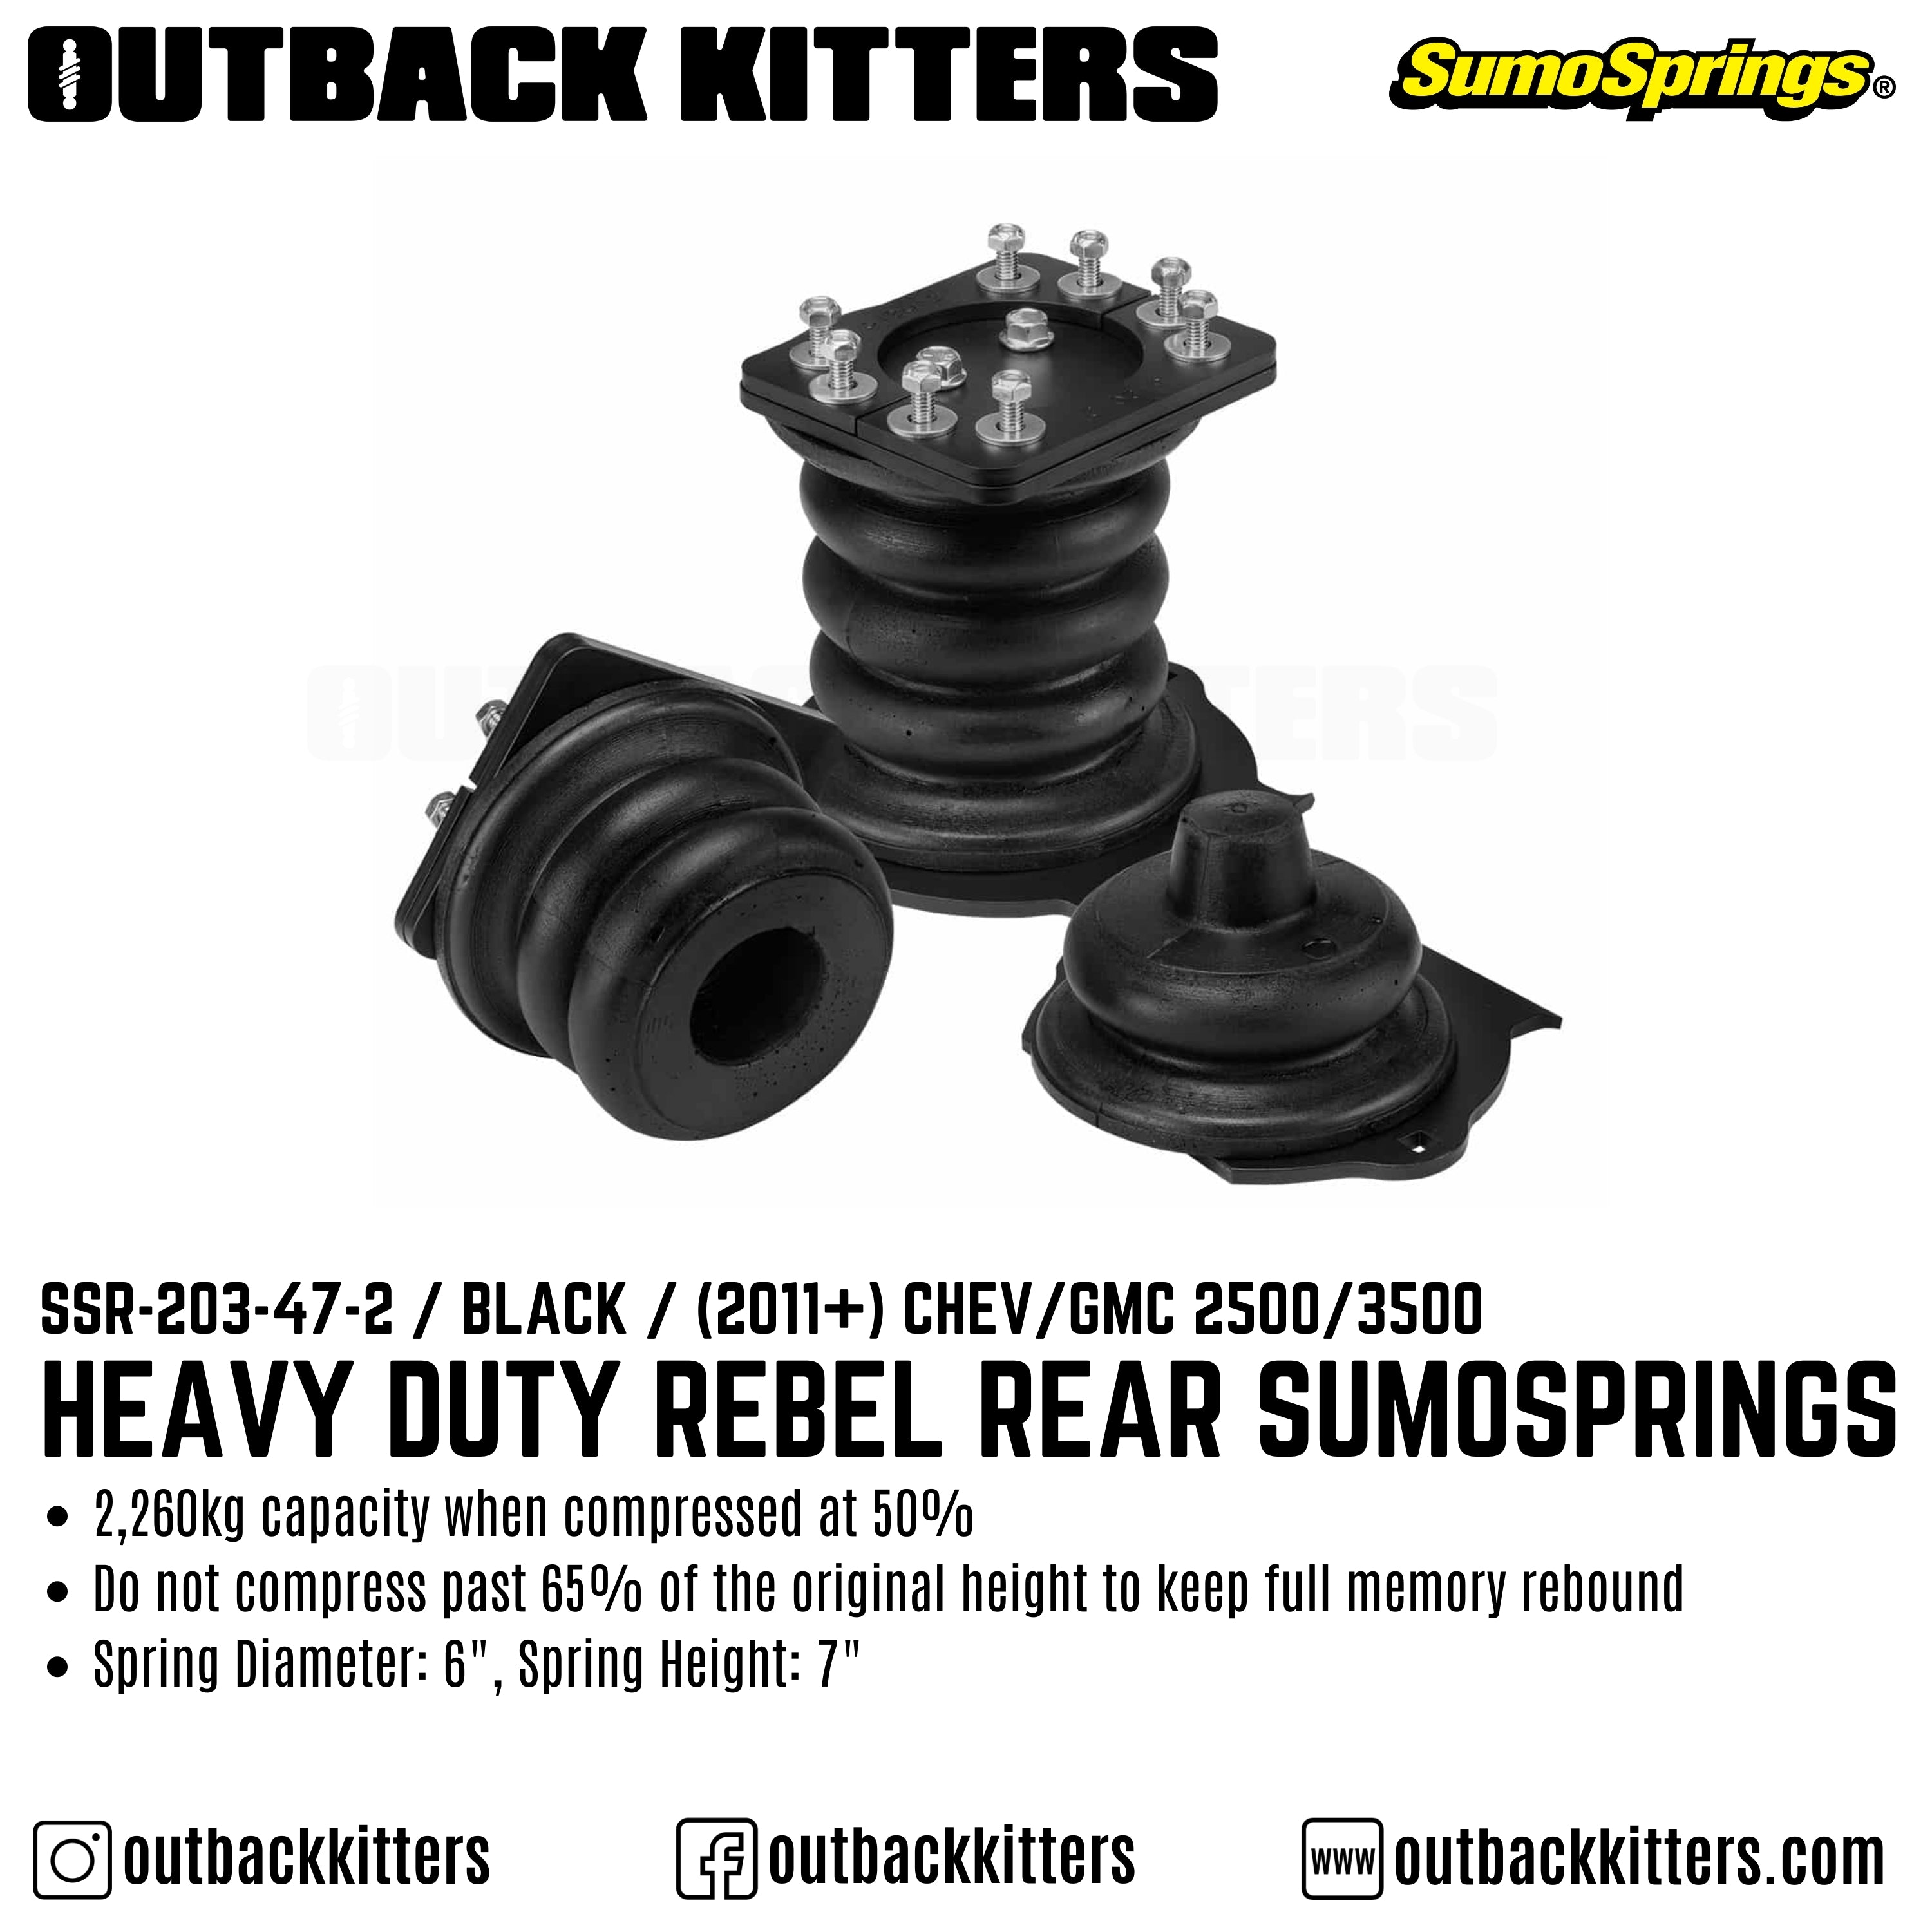 Heavy Duty Rebel Rear SumoSprings to suit 2011+ Chevrolet Silverado / GMC Sierra 2500 / 3500 - Outback Kitters